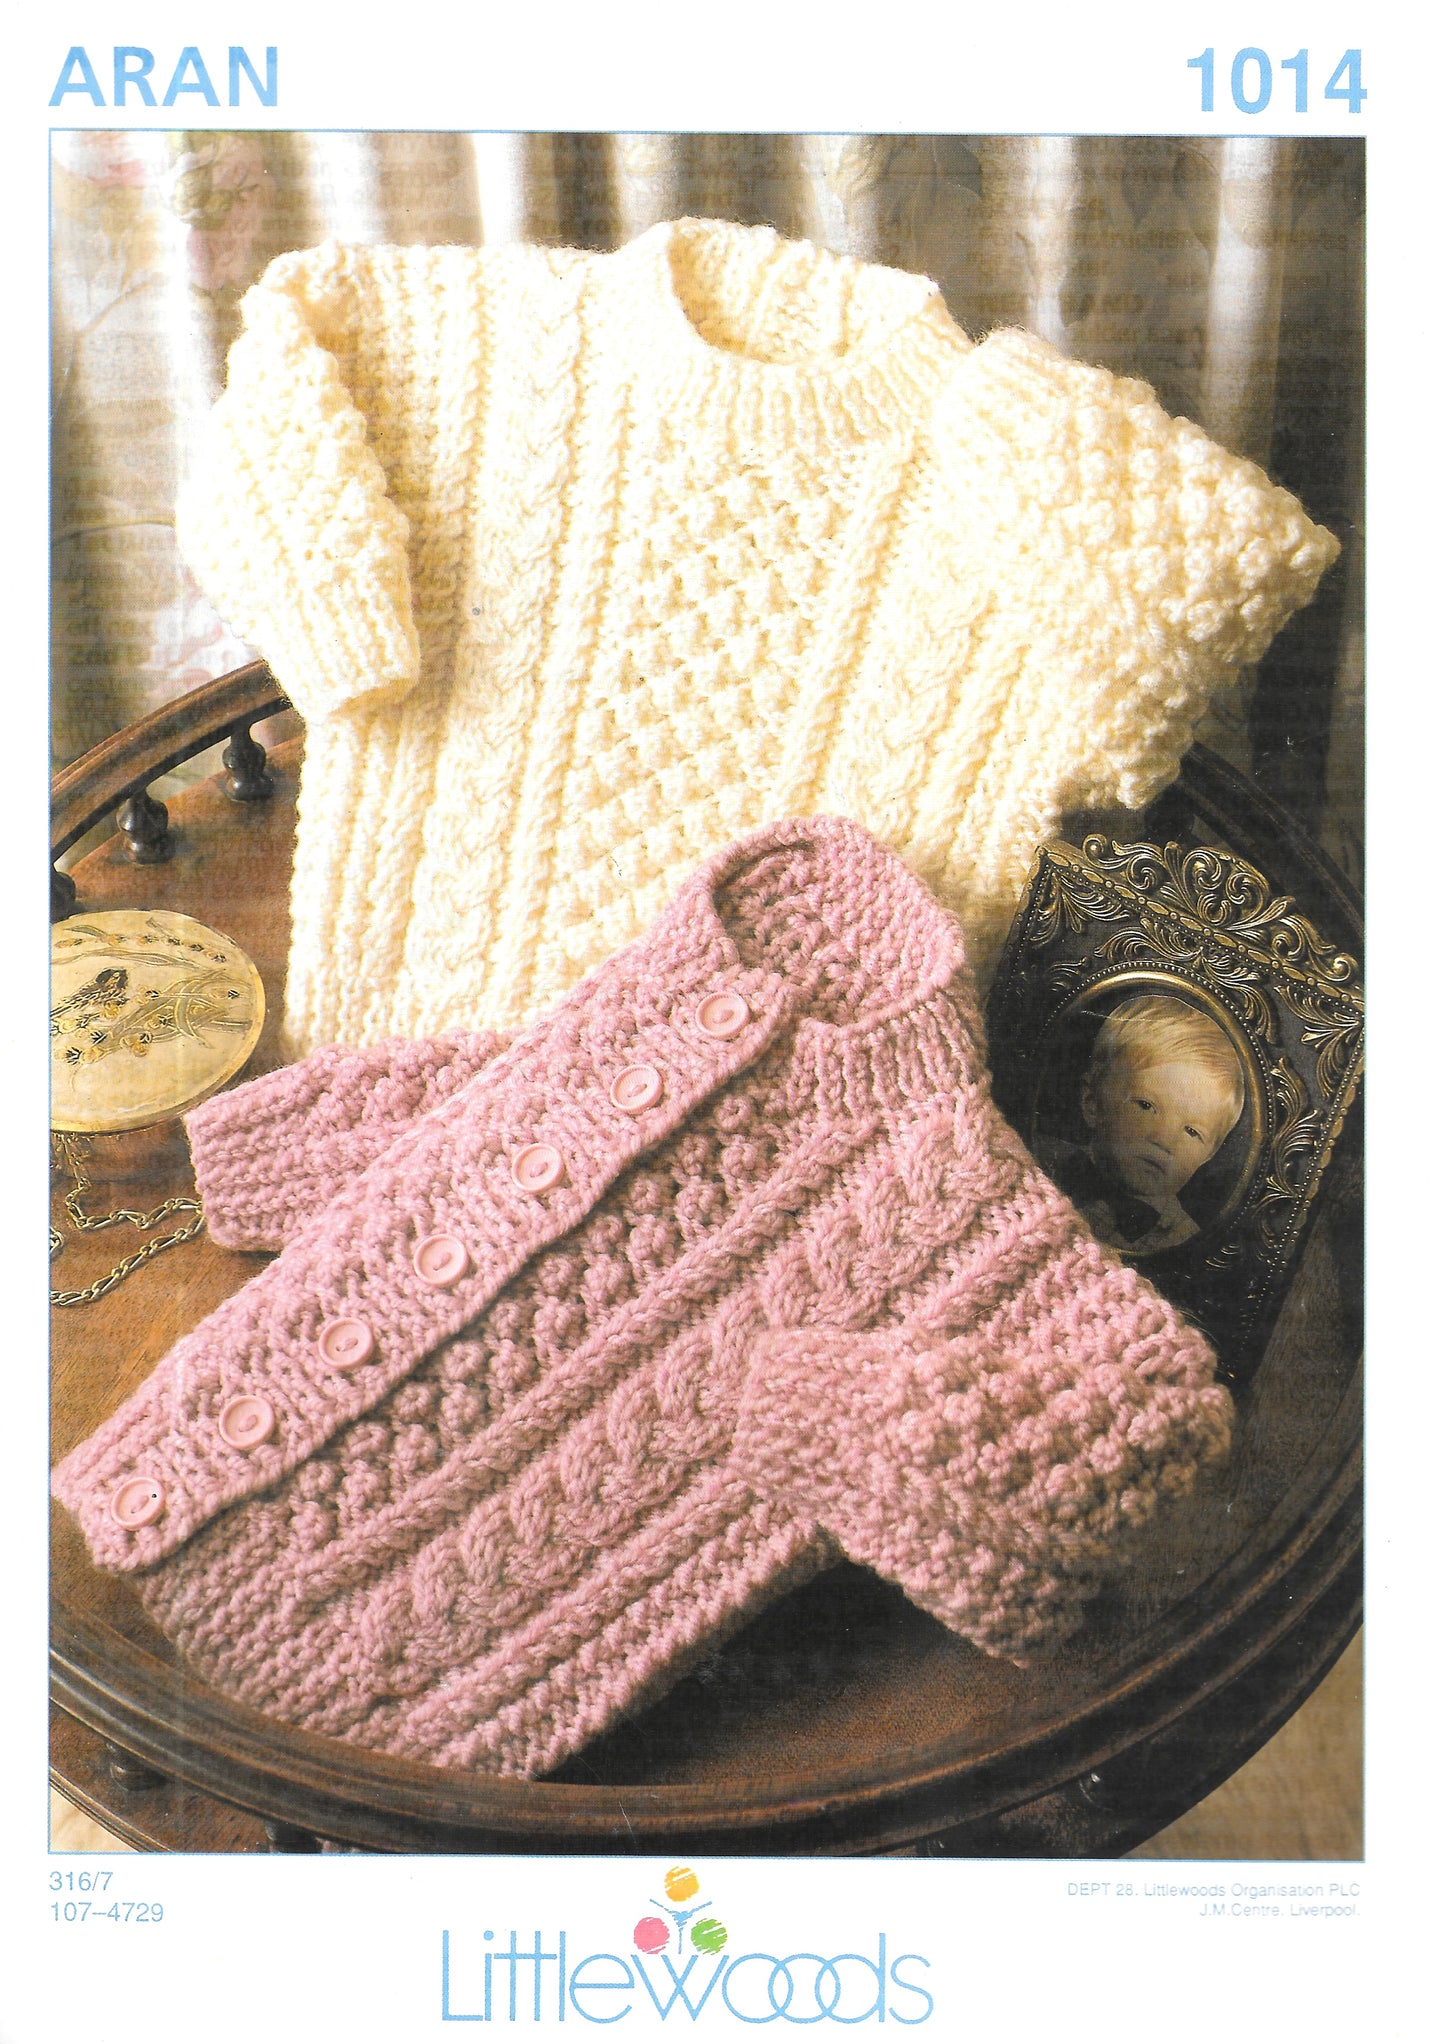 PRELOVED Littlewoods 1014 Knitting Pattern. Child's Cardigans/Sweater in Aran